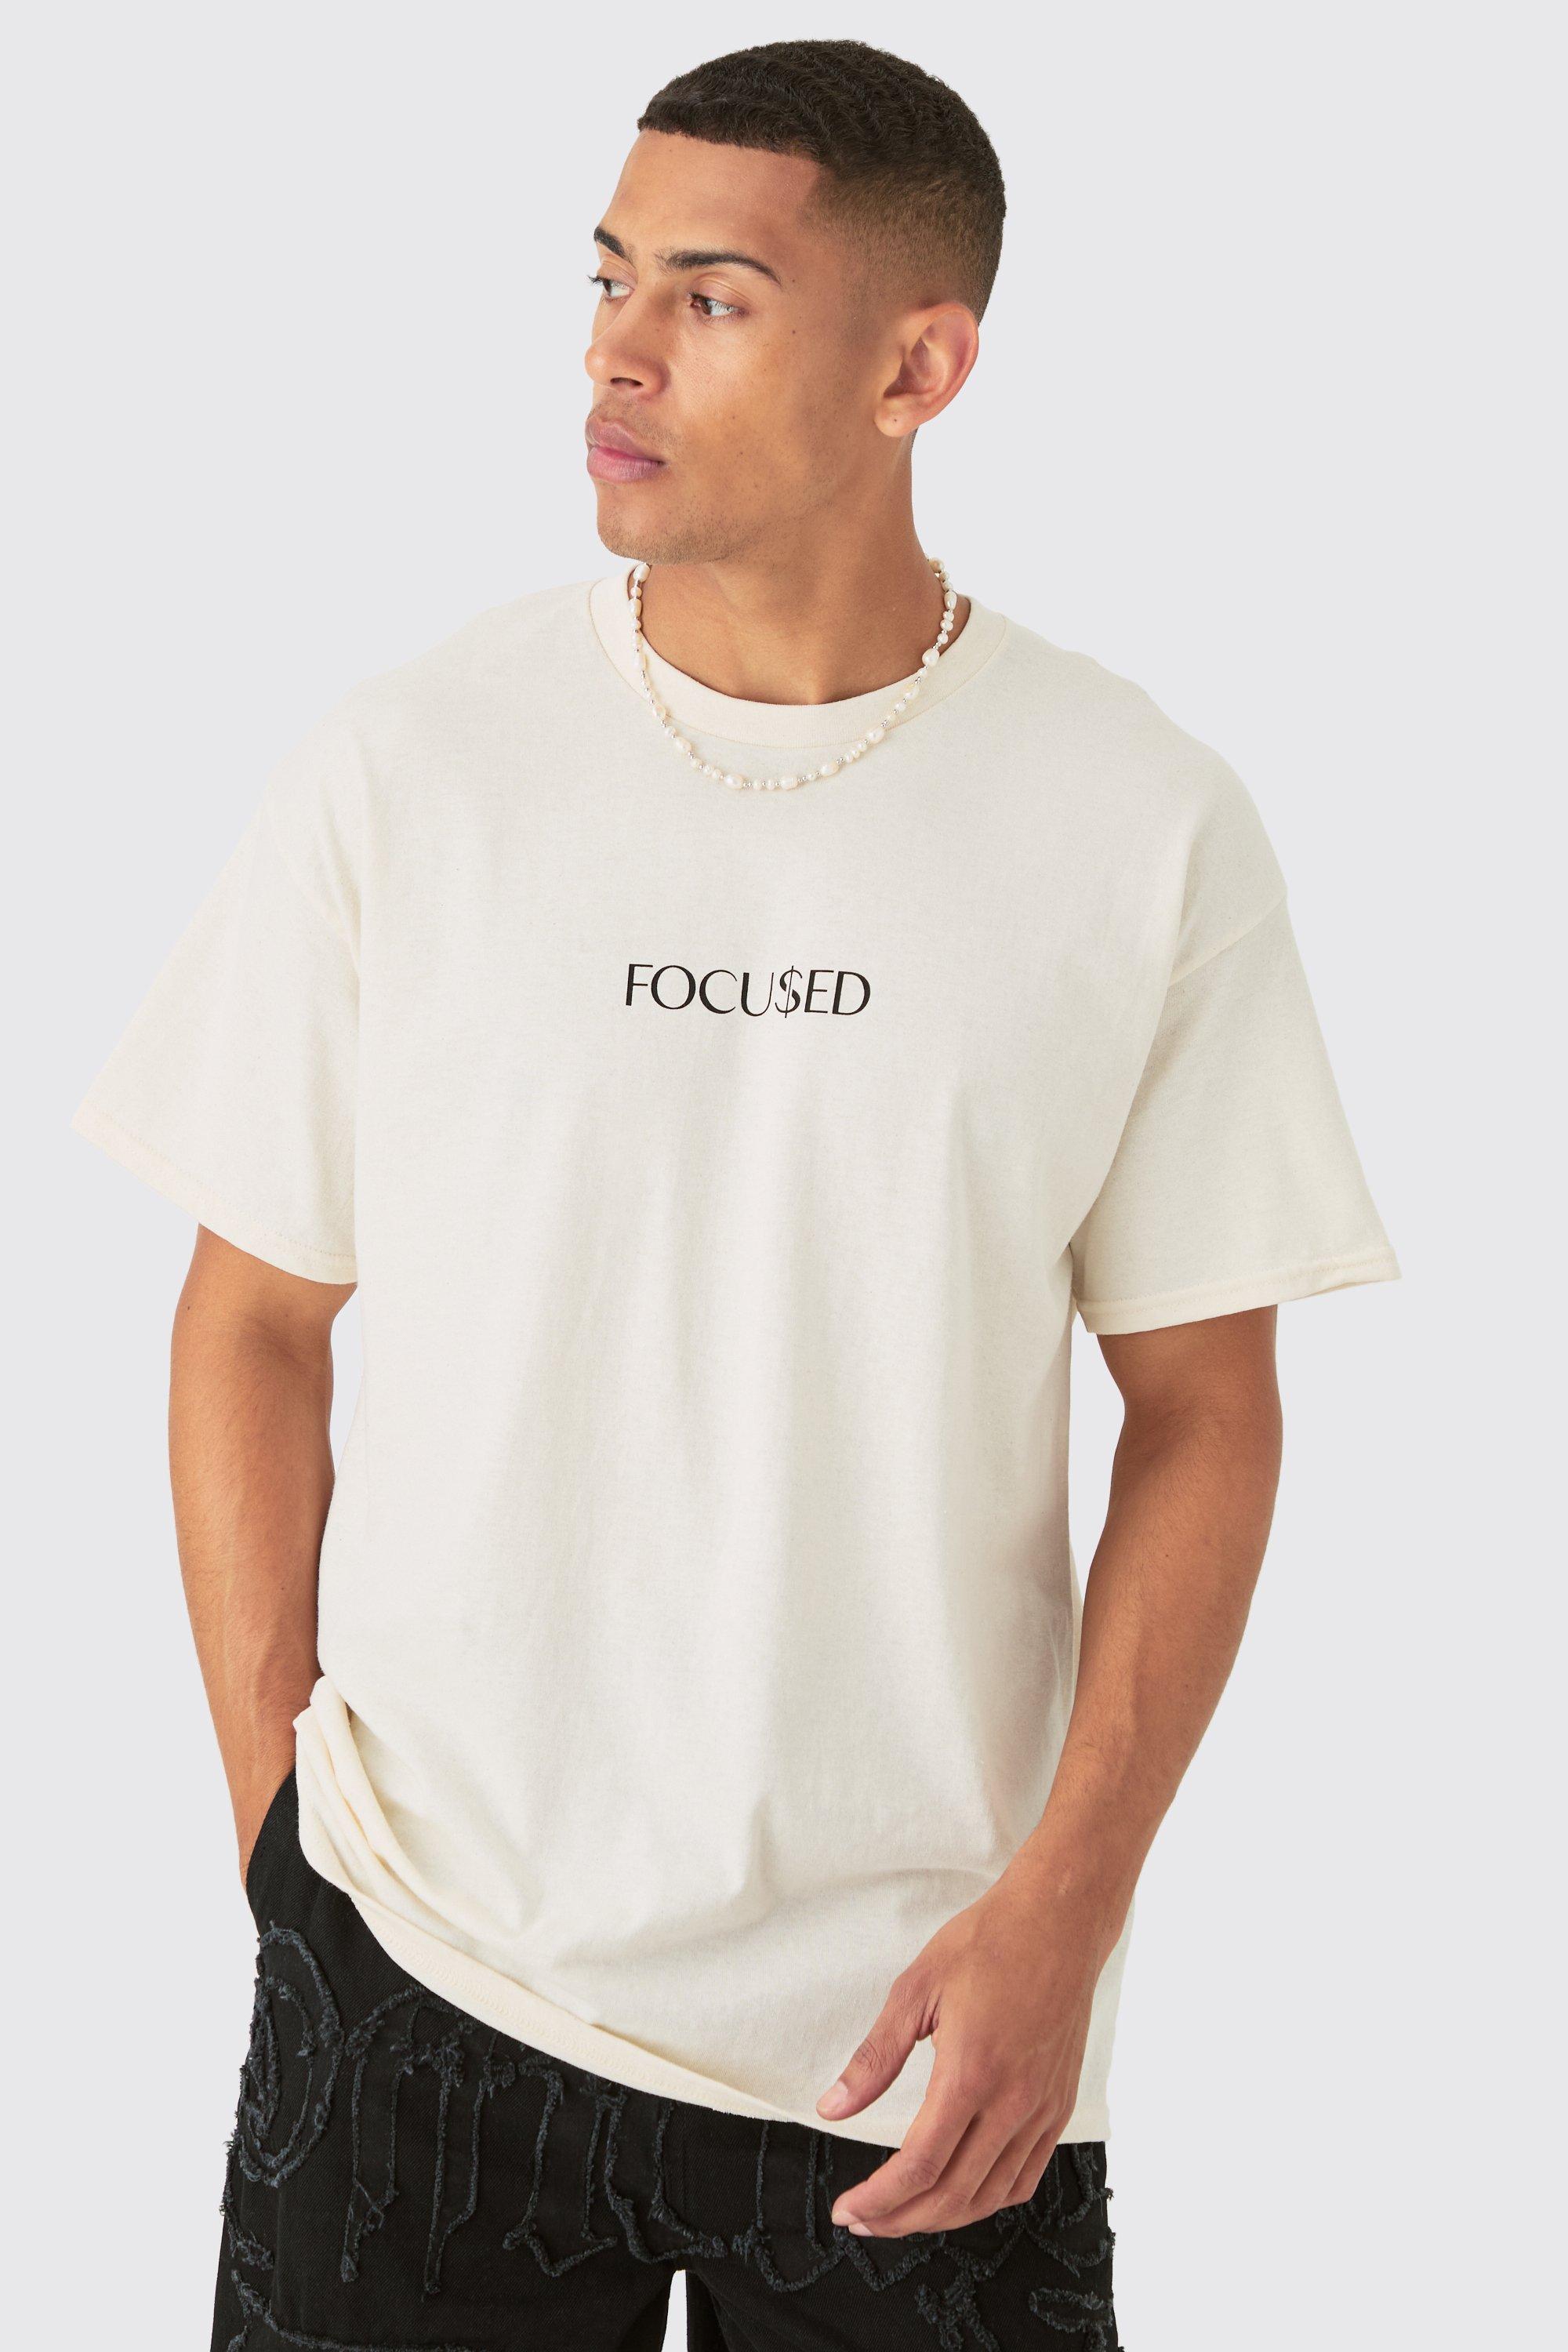 Image of Oversized Focused Slogan T-shirt, Cream